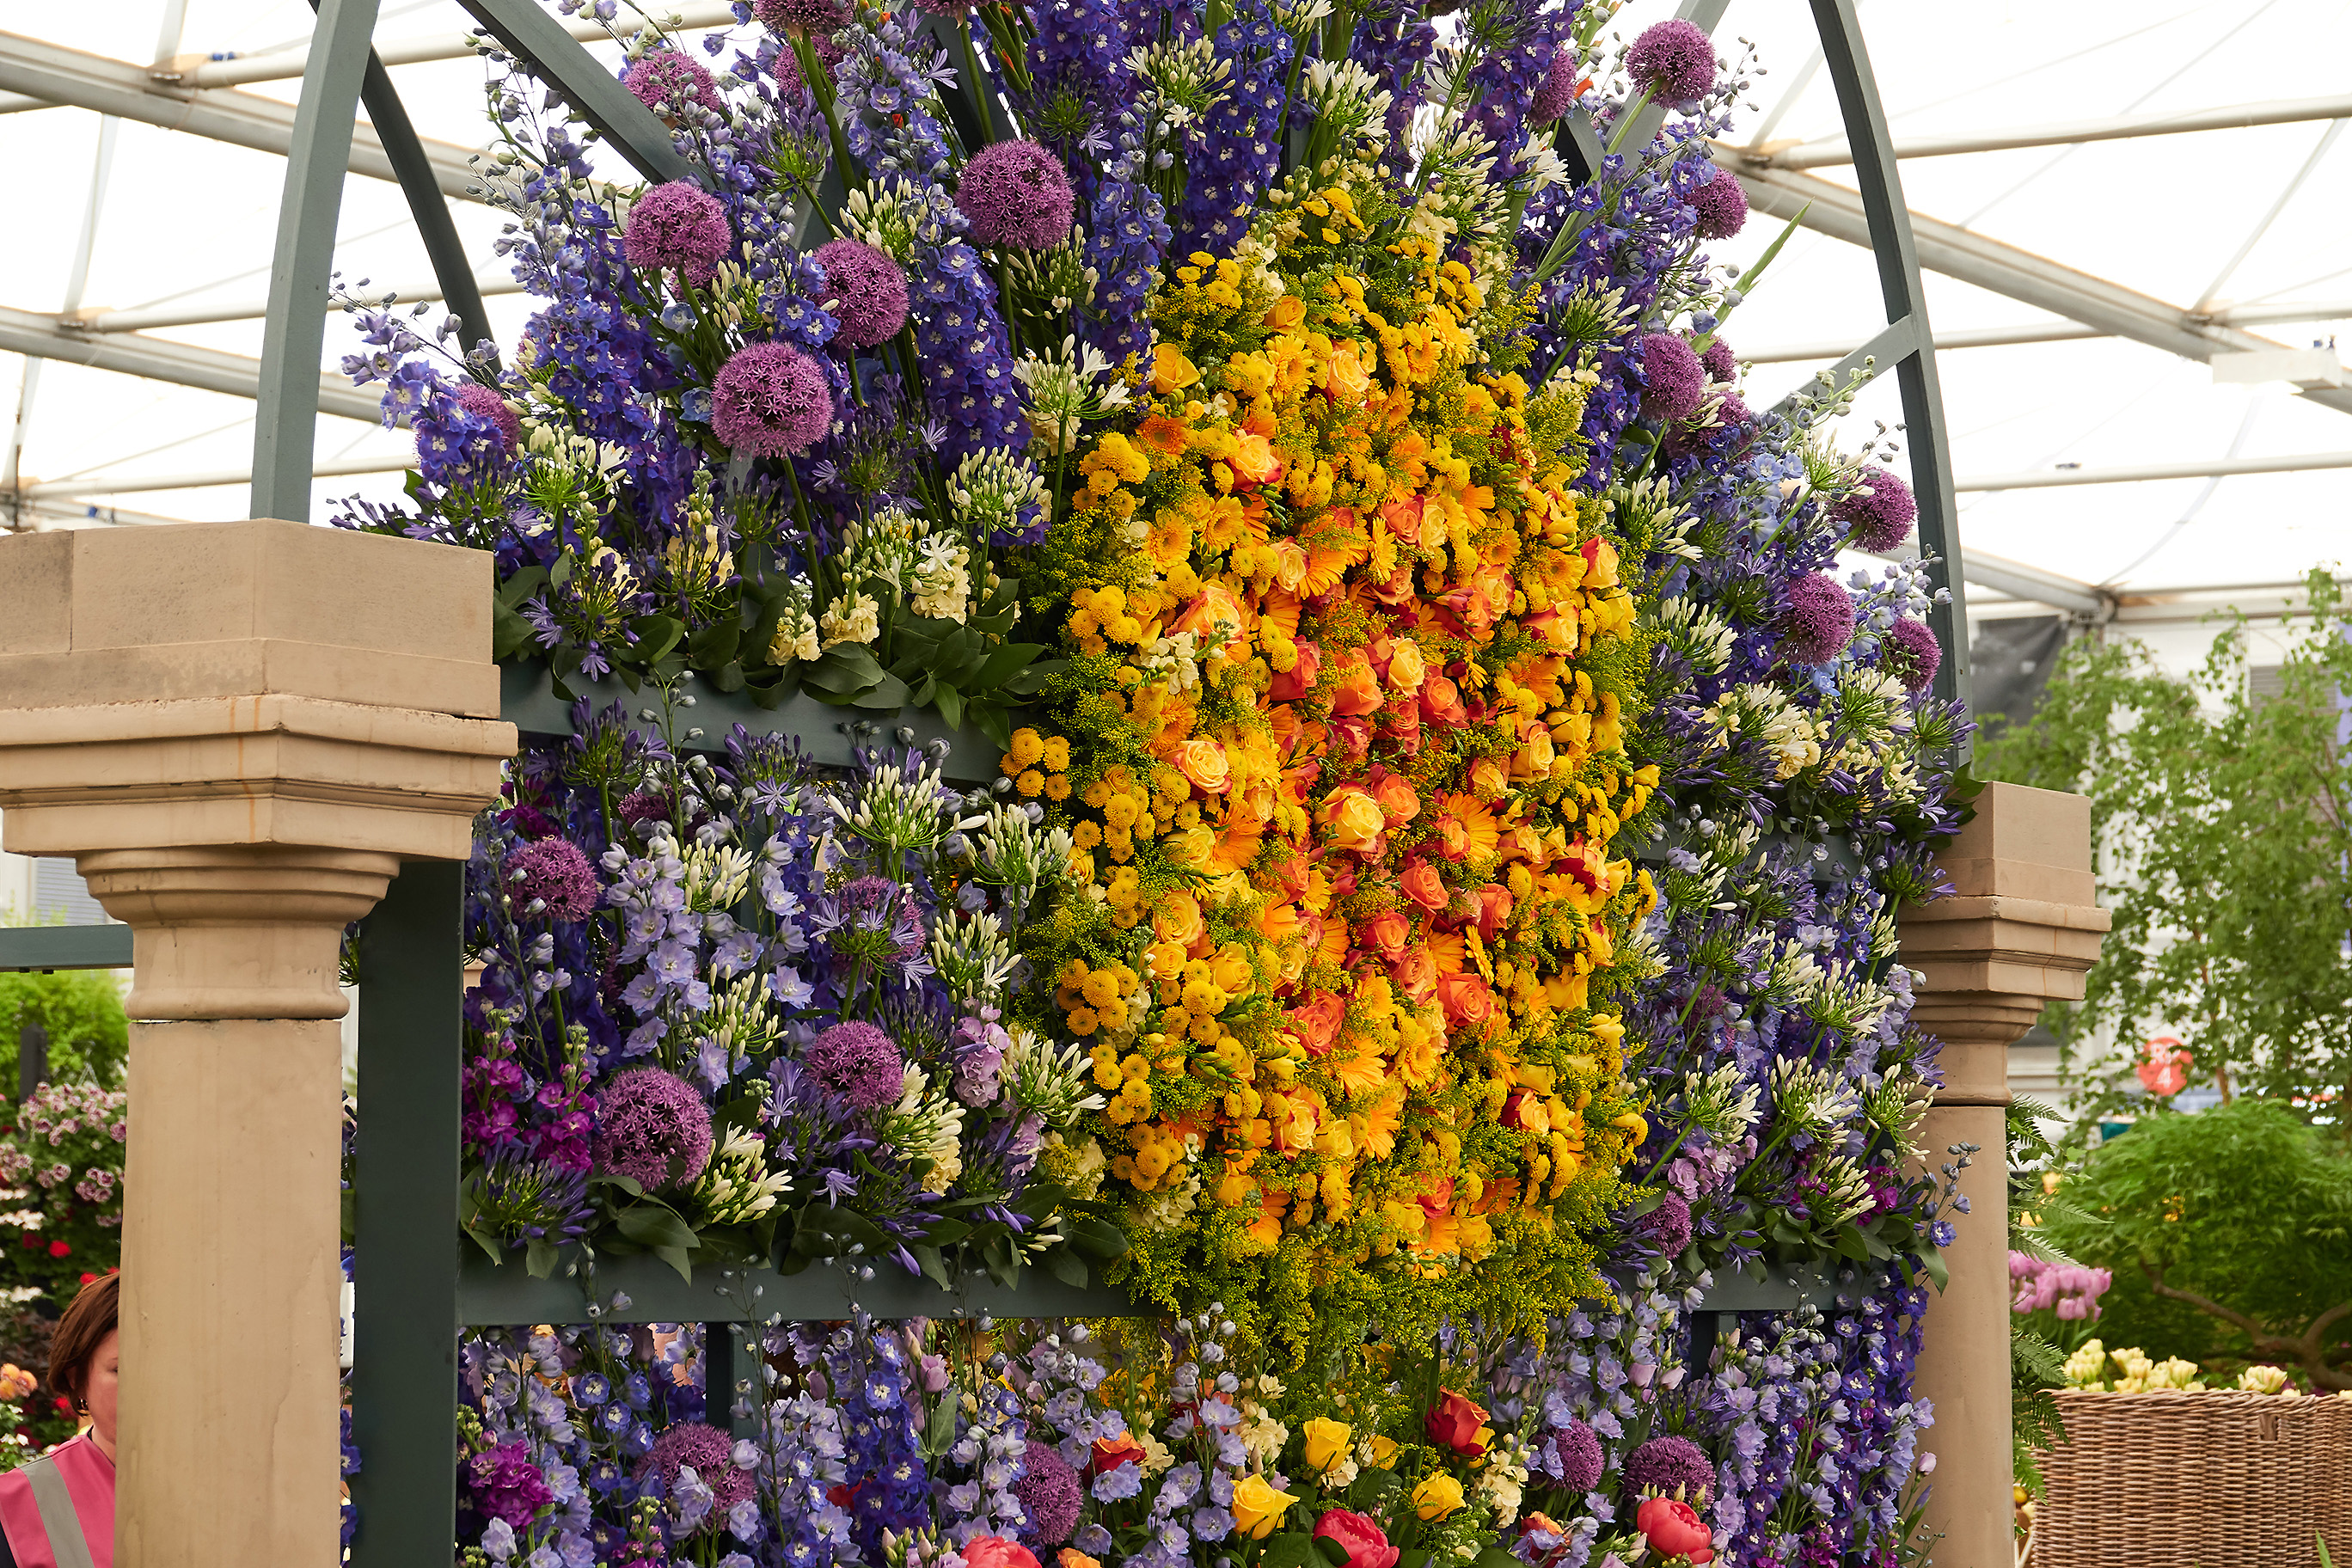 The Rhs Chelsea Flower Show Gardens